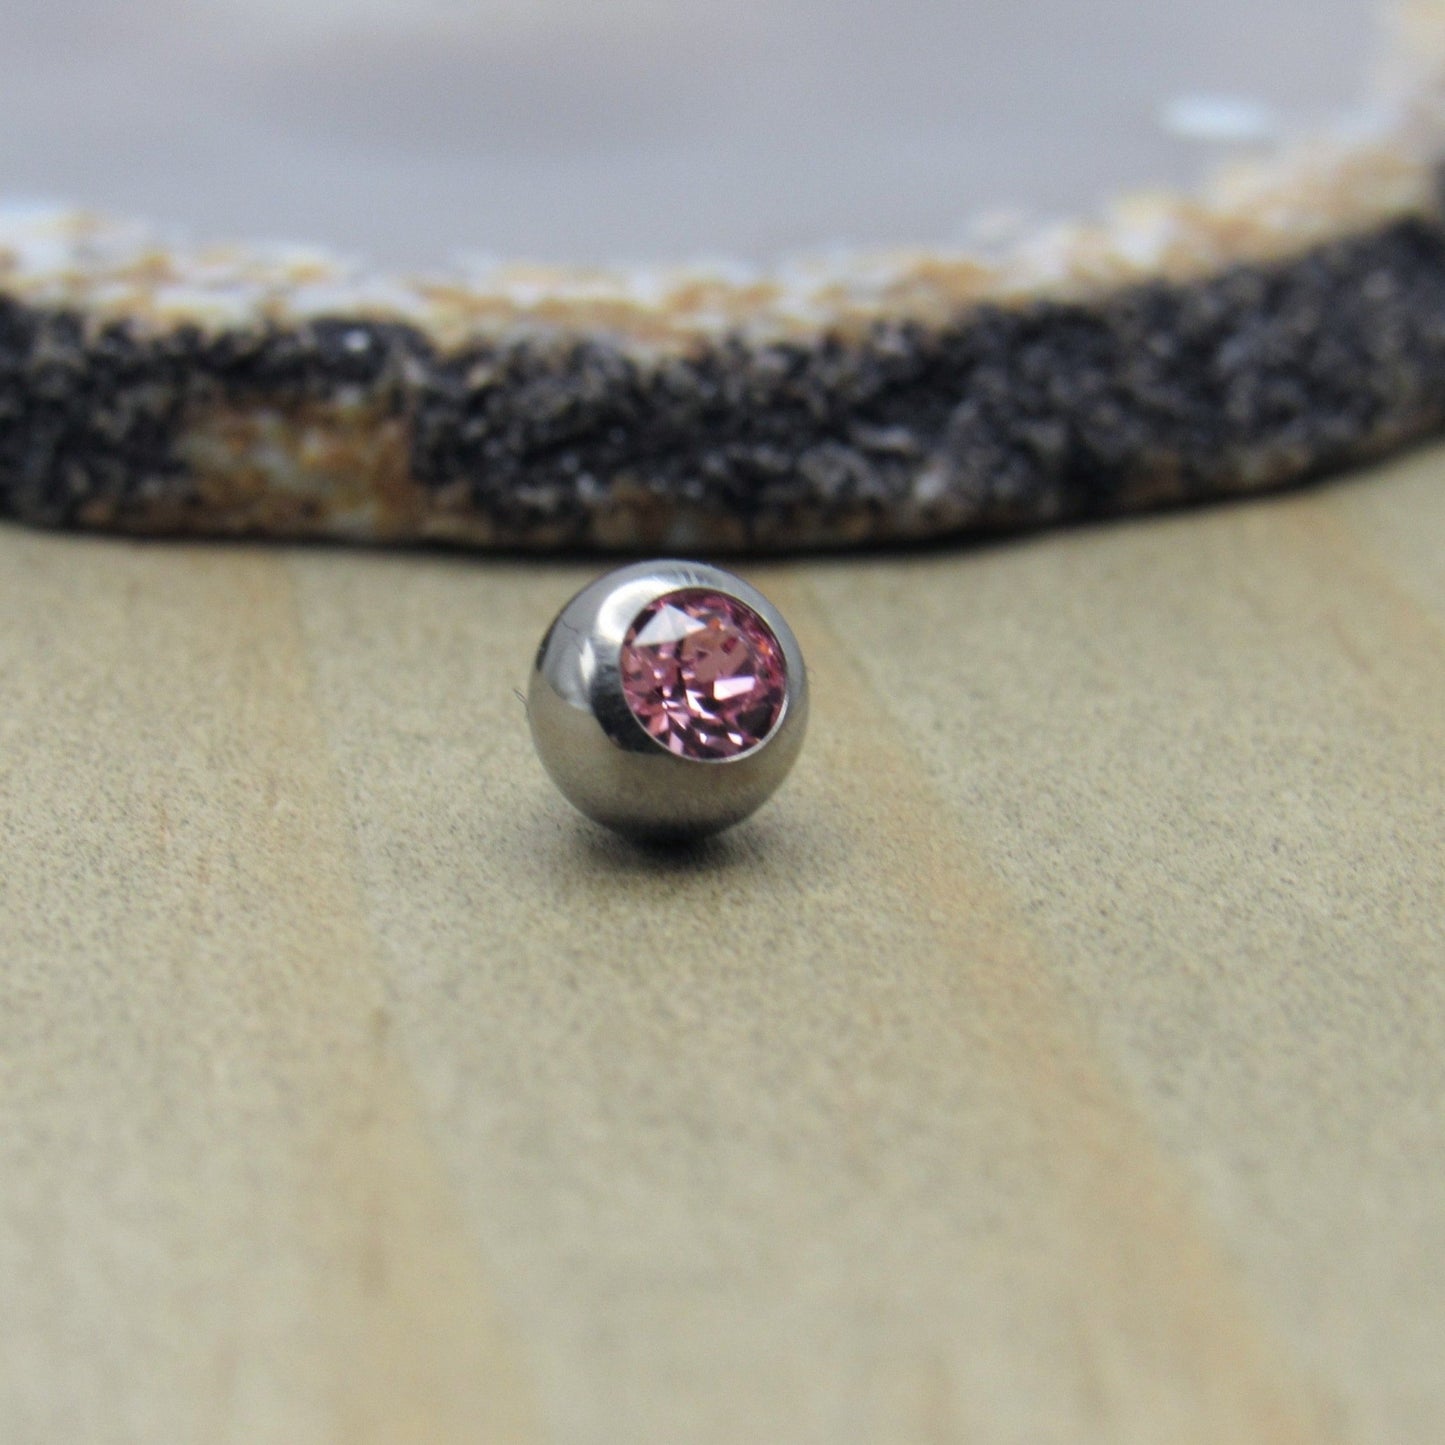 14g 5mm Pink CZ gemstone titanium threaded ball ends replacement body jewelry part - Siren Body Jewelry